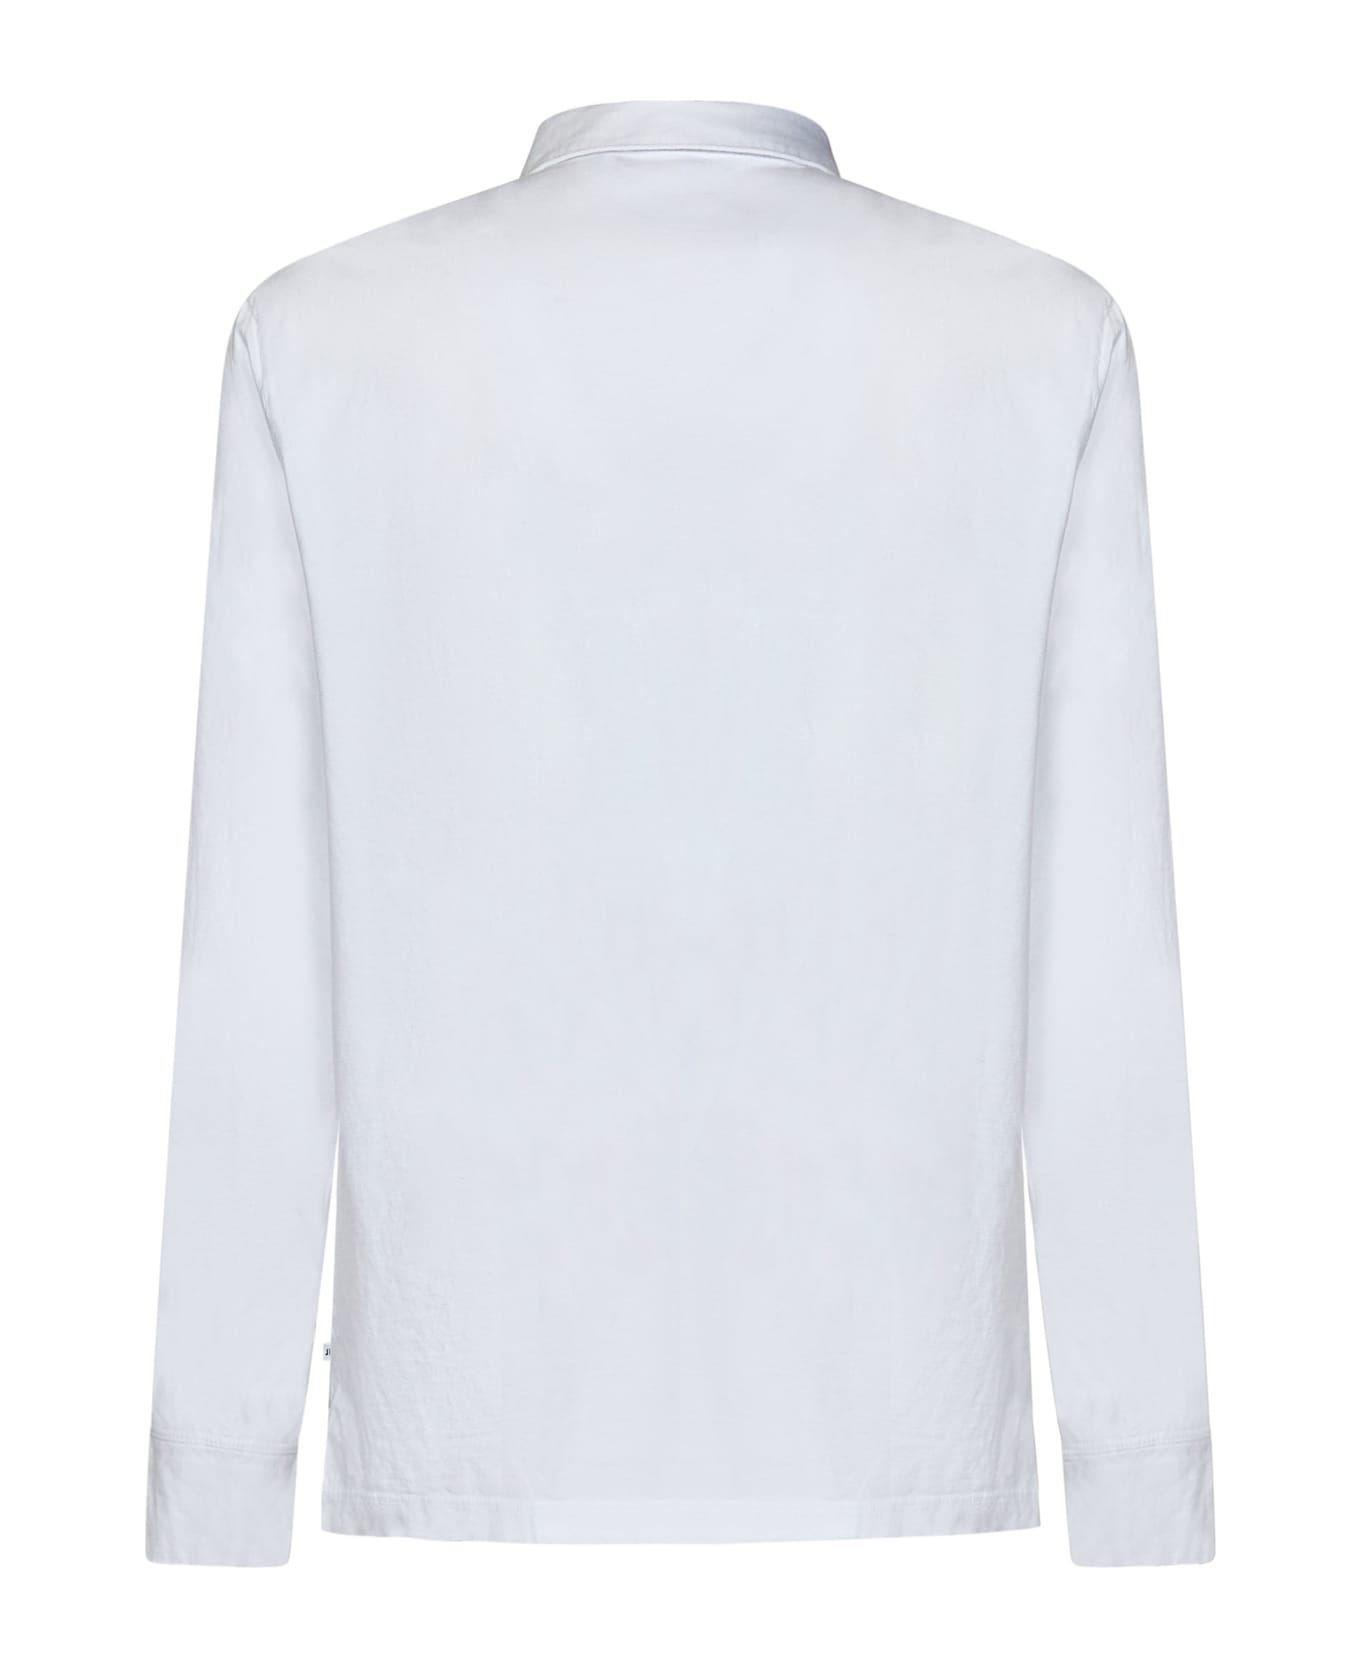 James Perse Polo Shirt - White